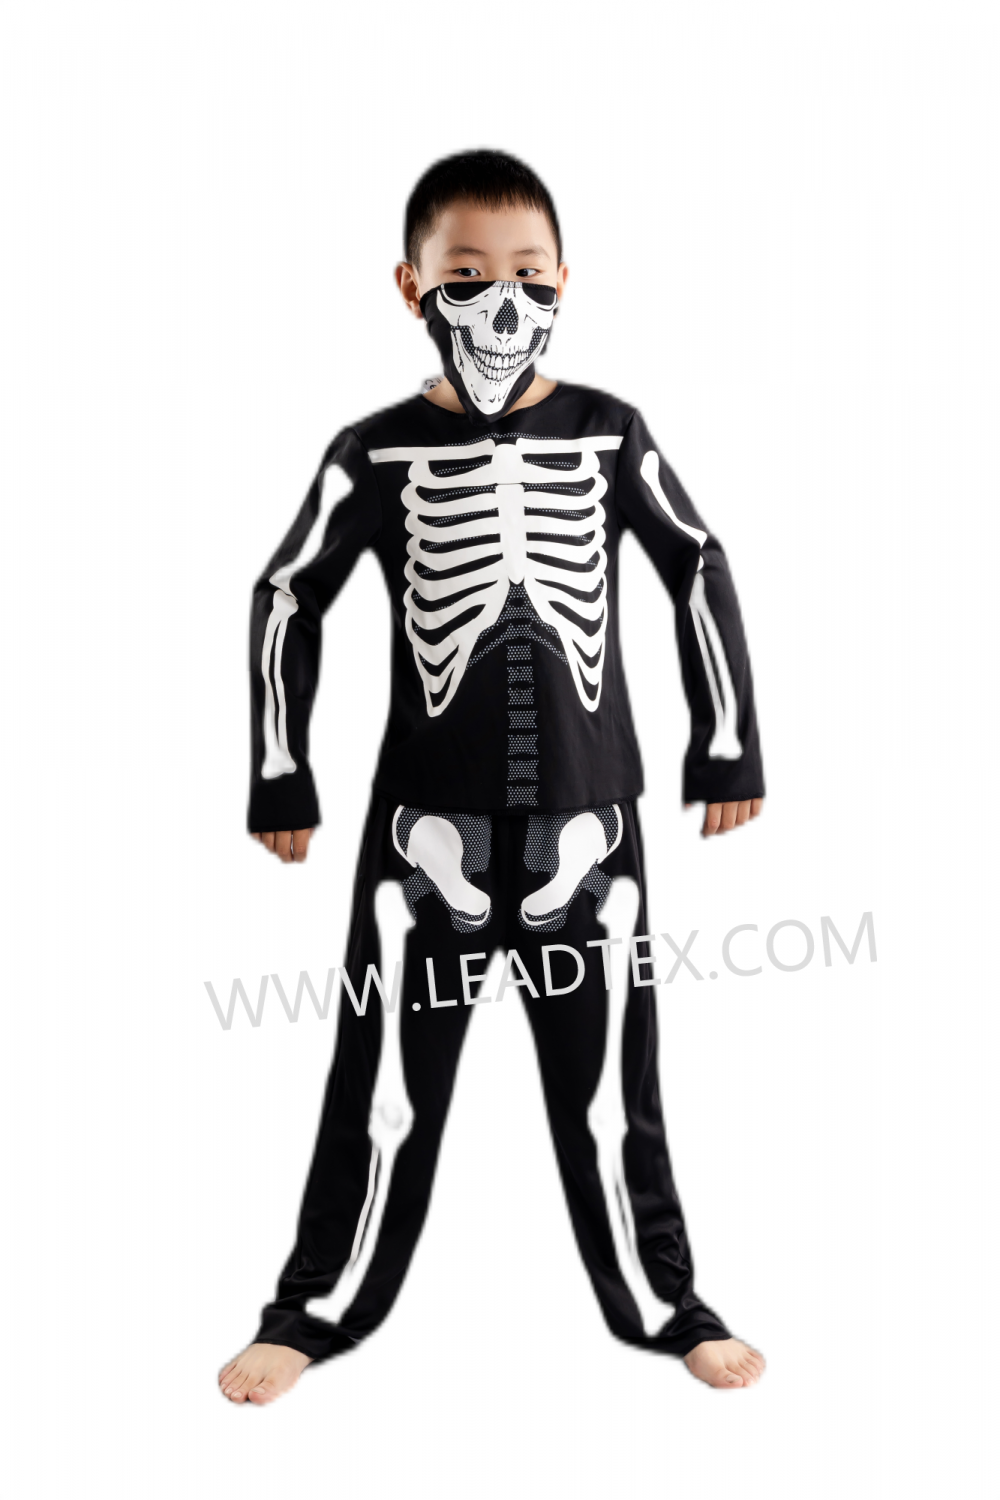 Skeleton costumes